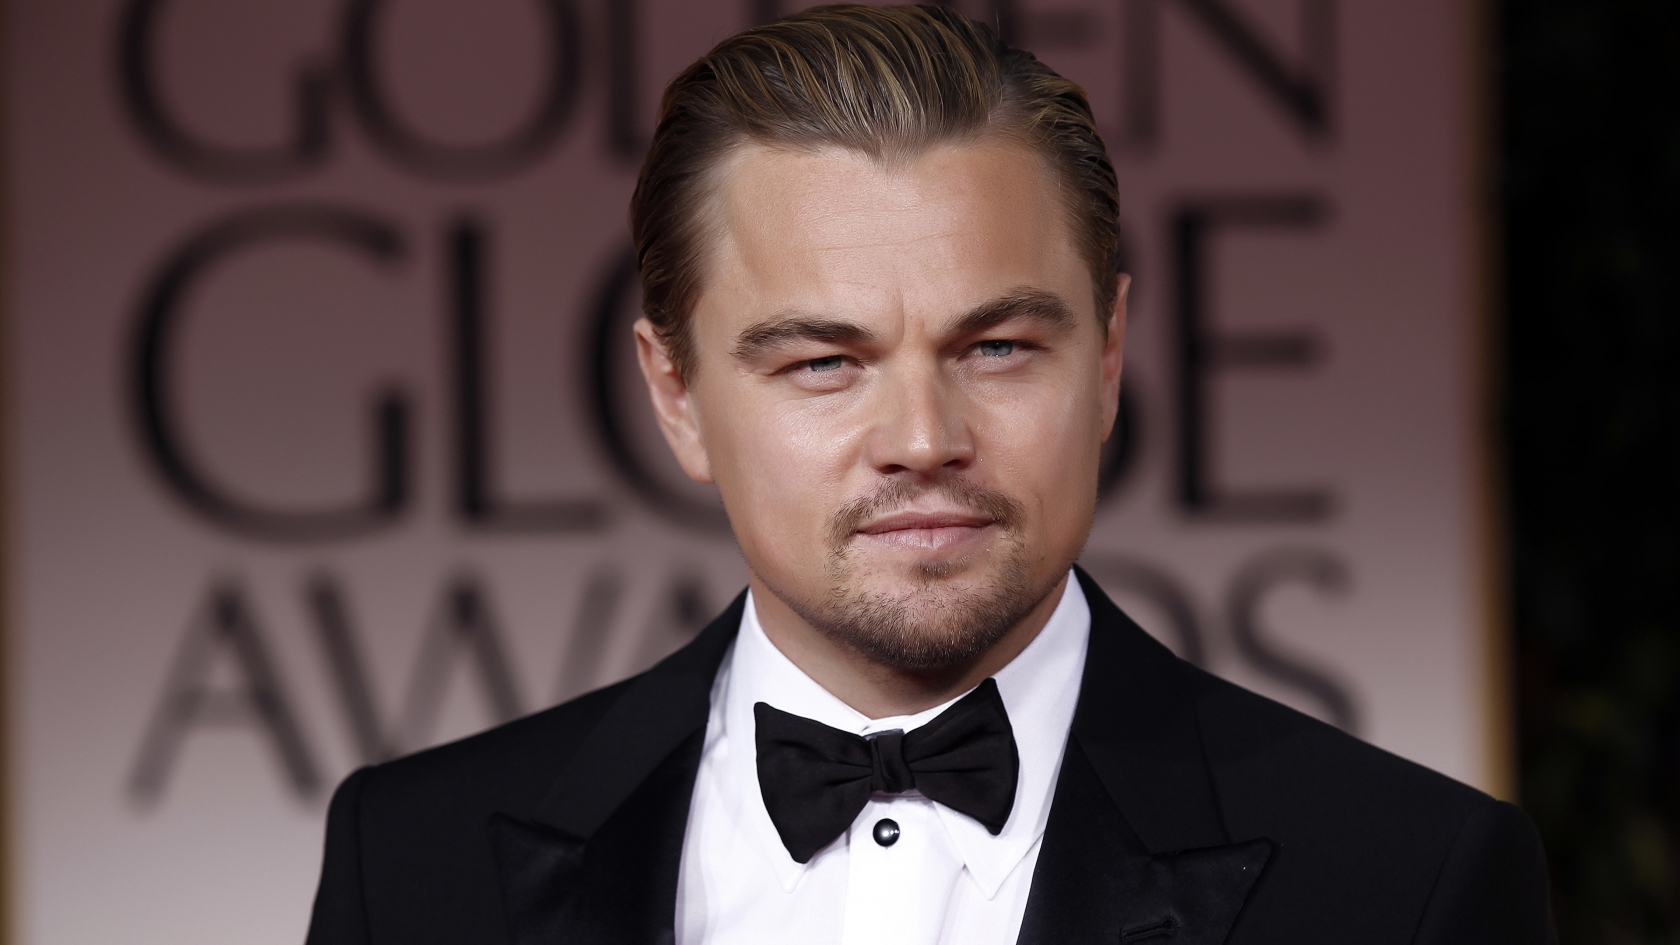 Leonardo DiCaprio in Tuxedo for 1680 x 945 HDTV resolution